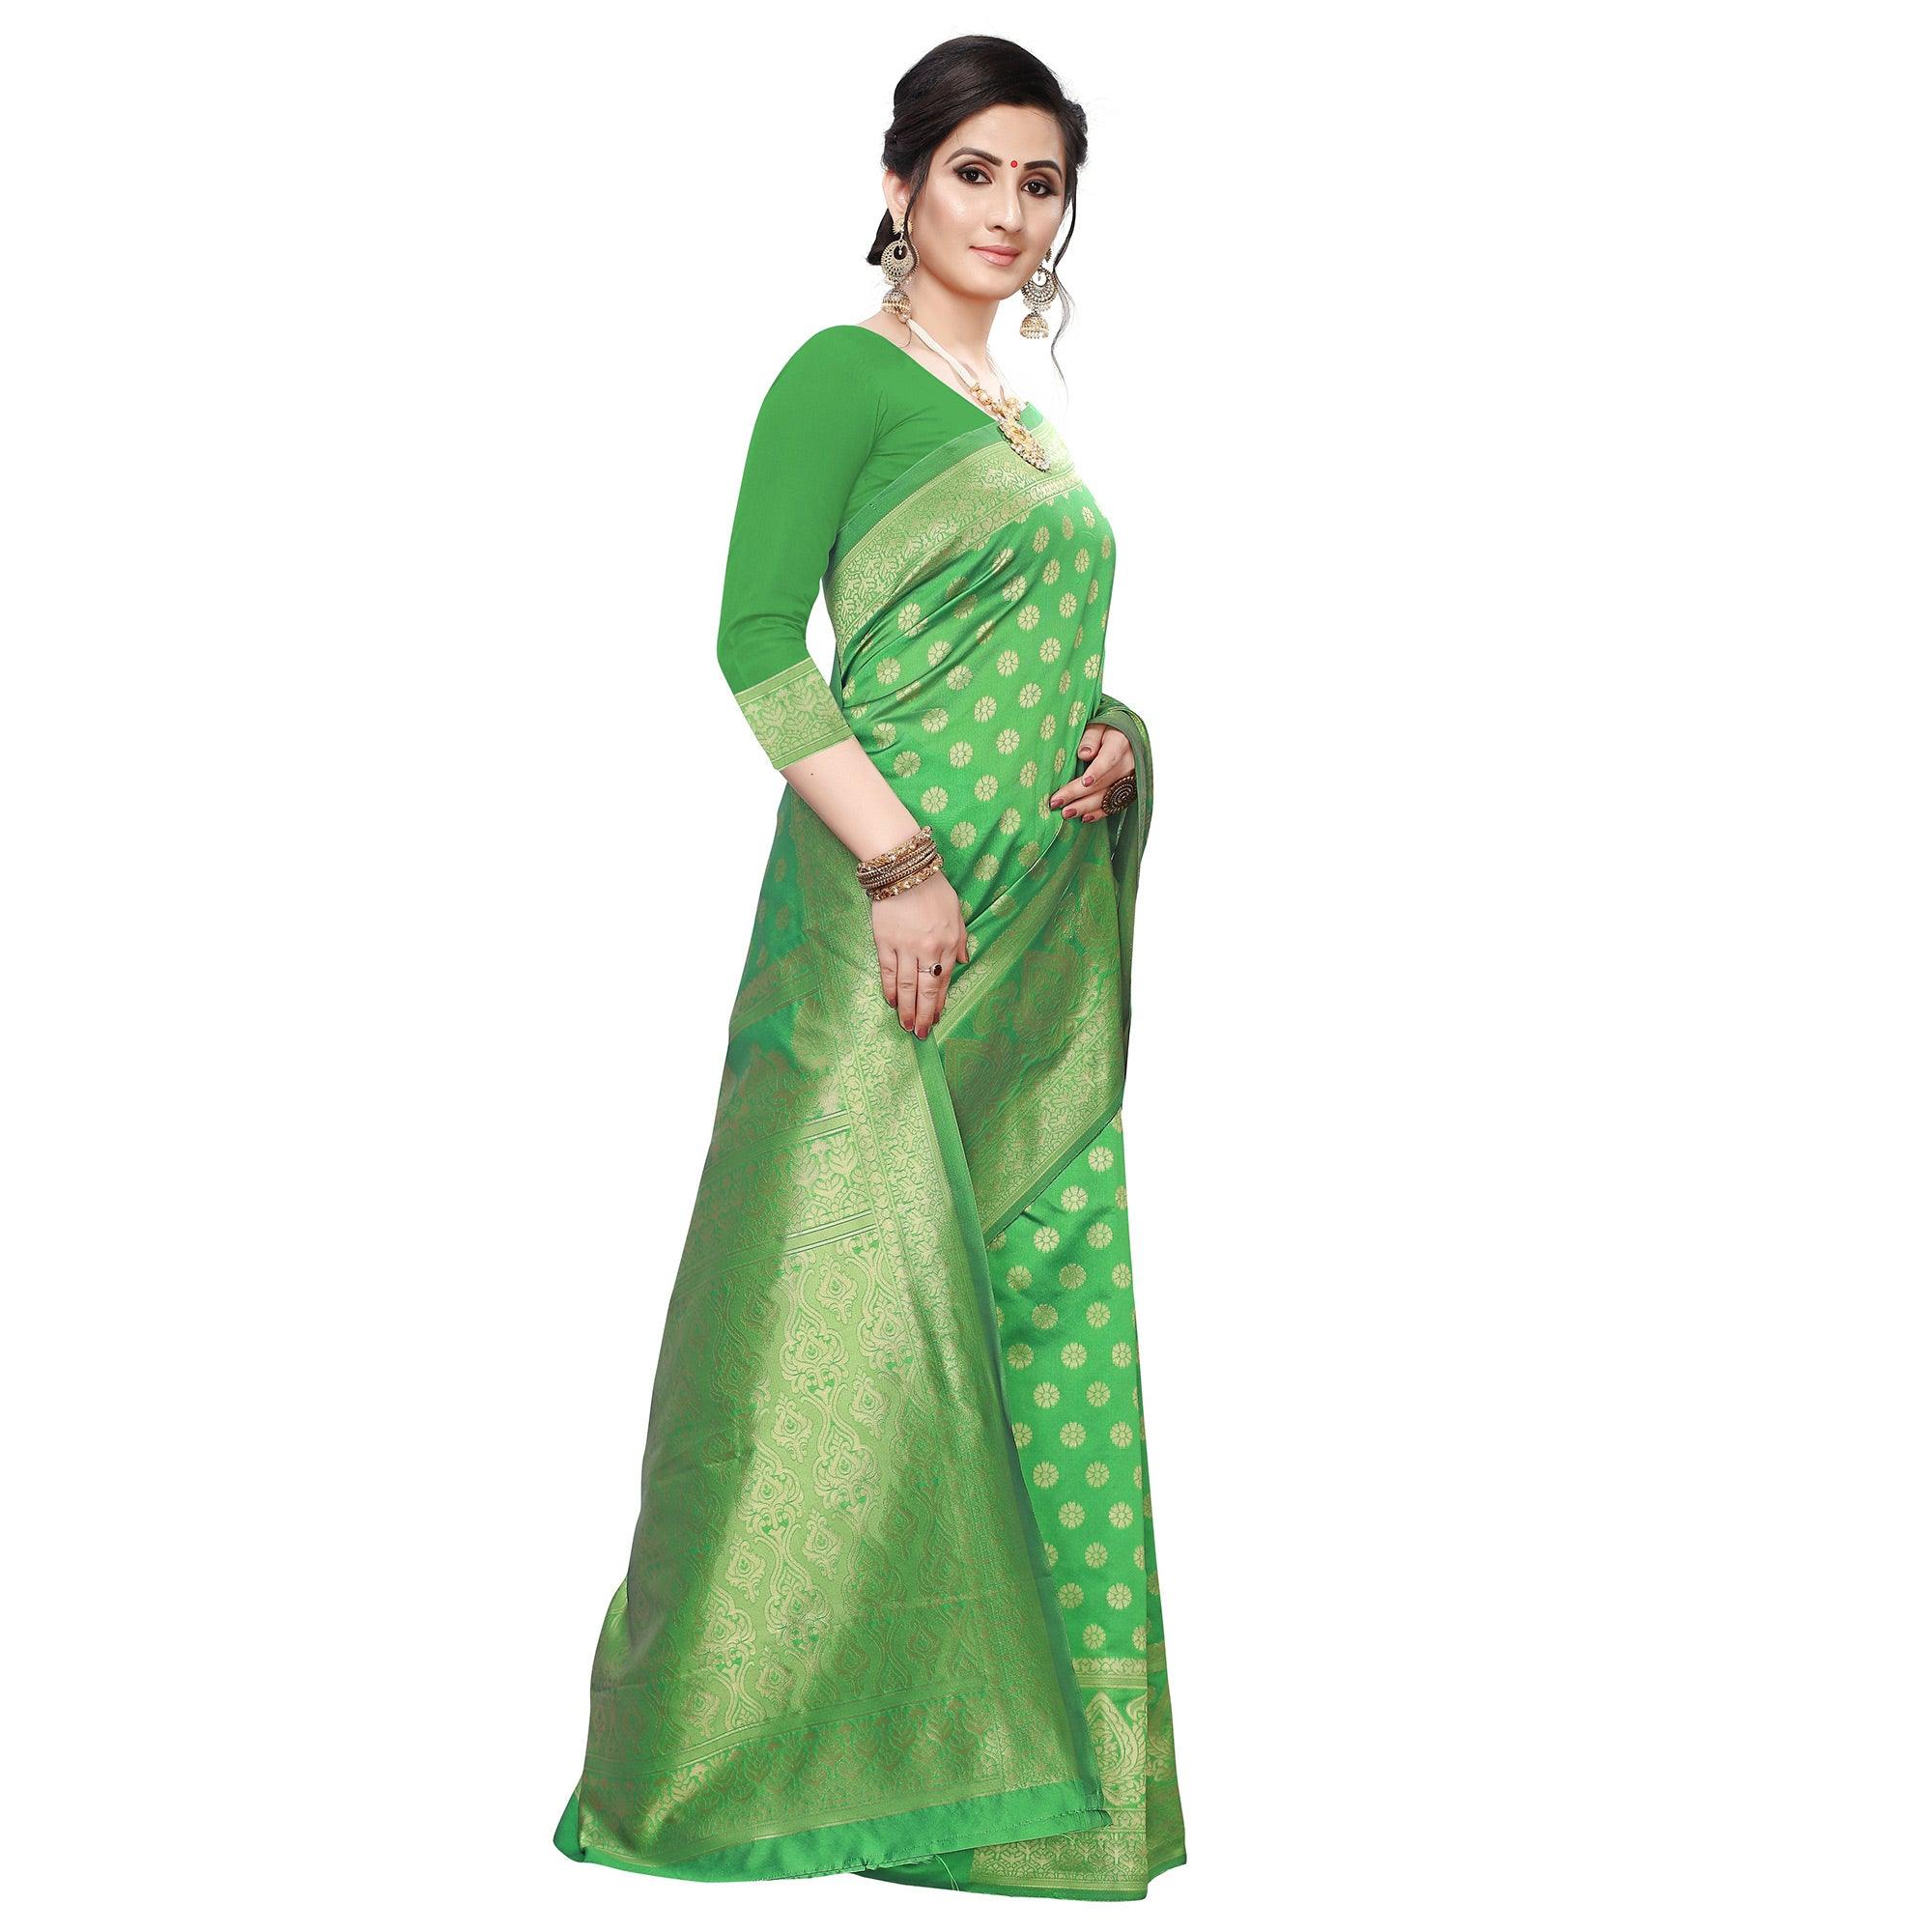 Marvellous Green Colored Festive Wear Woven Art Silk Saree - Peachmode